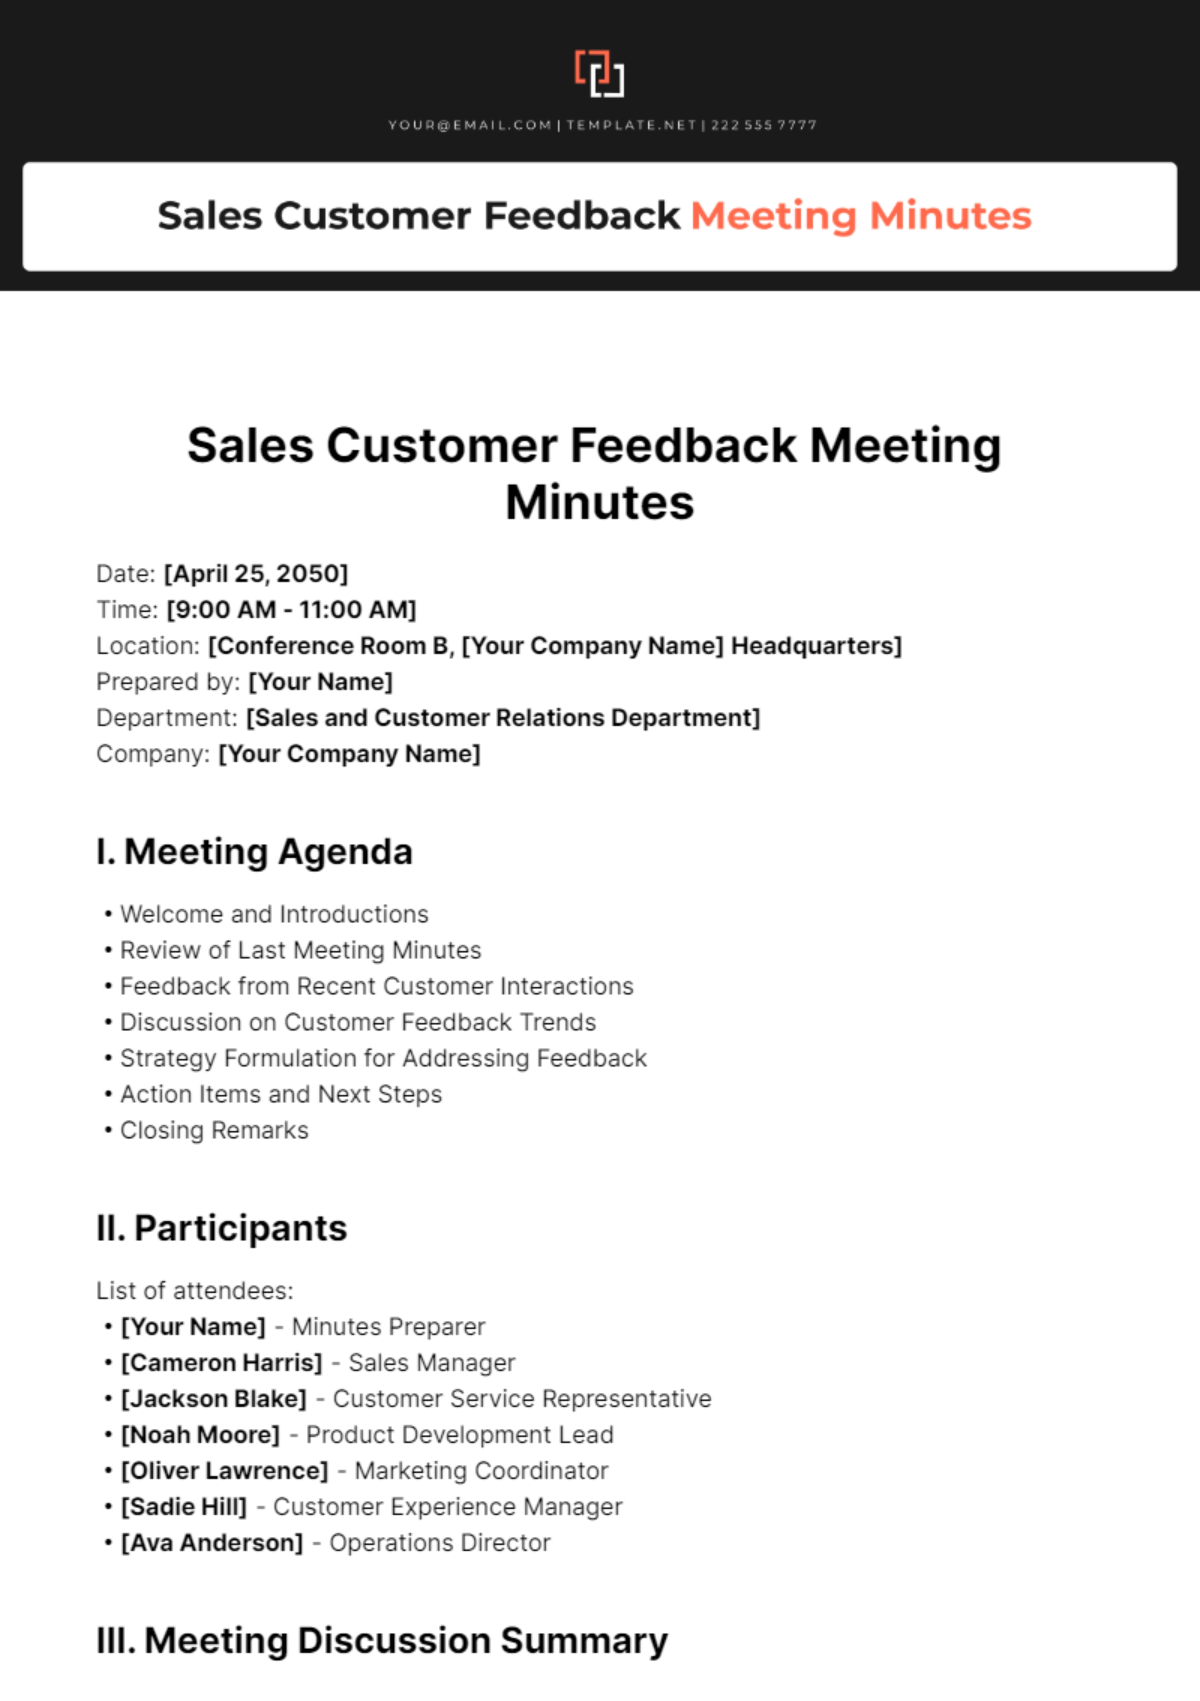 Sales Customer Feedback Meeting Minutes Template